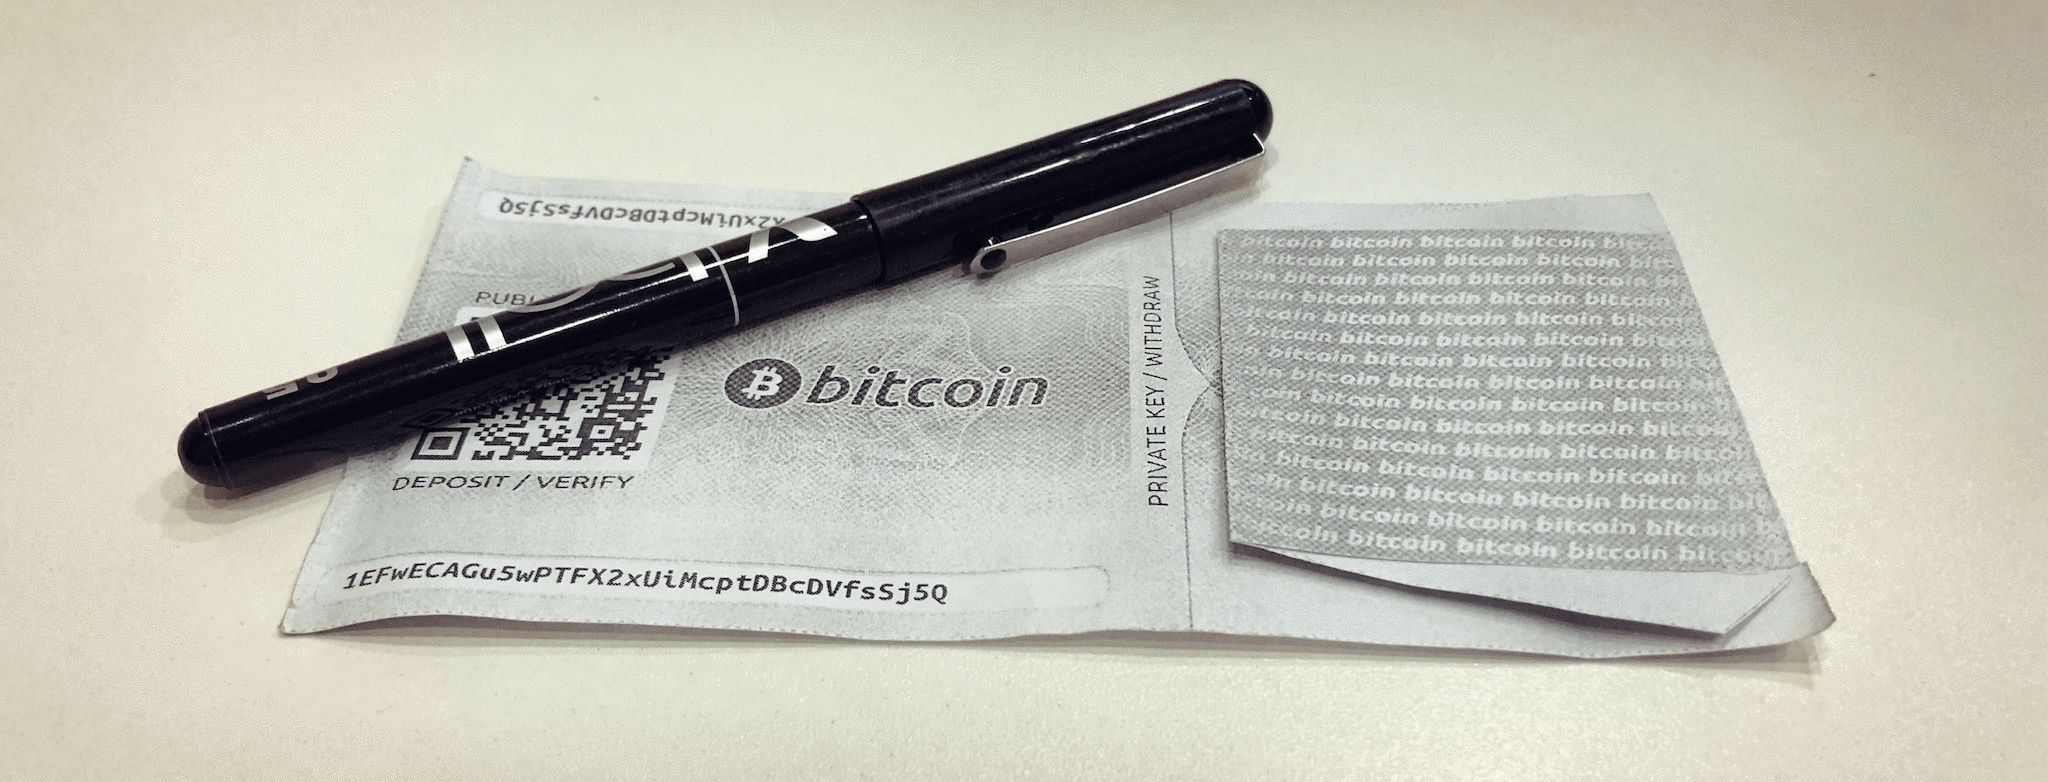 The best bitcoin wallet